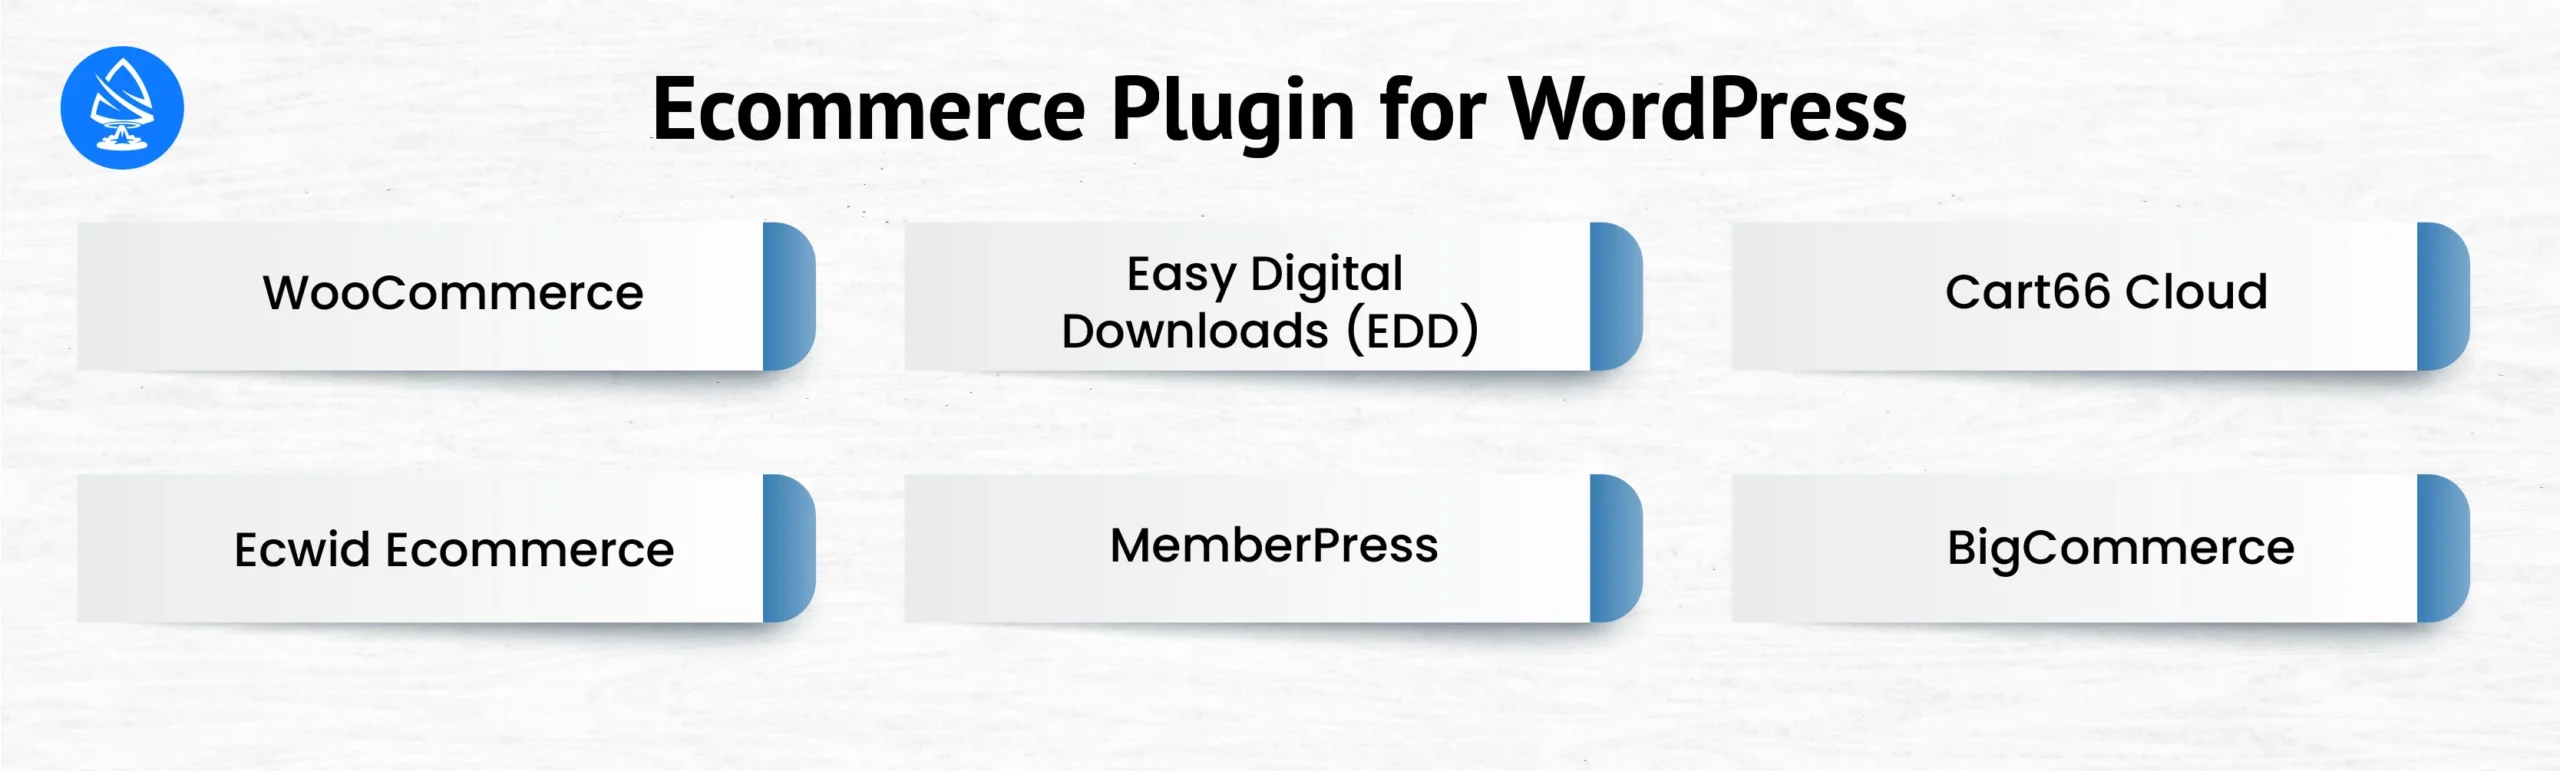 Ecommerce Plugin for WordPress